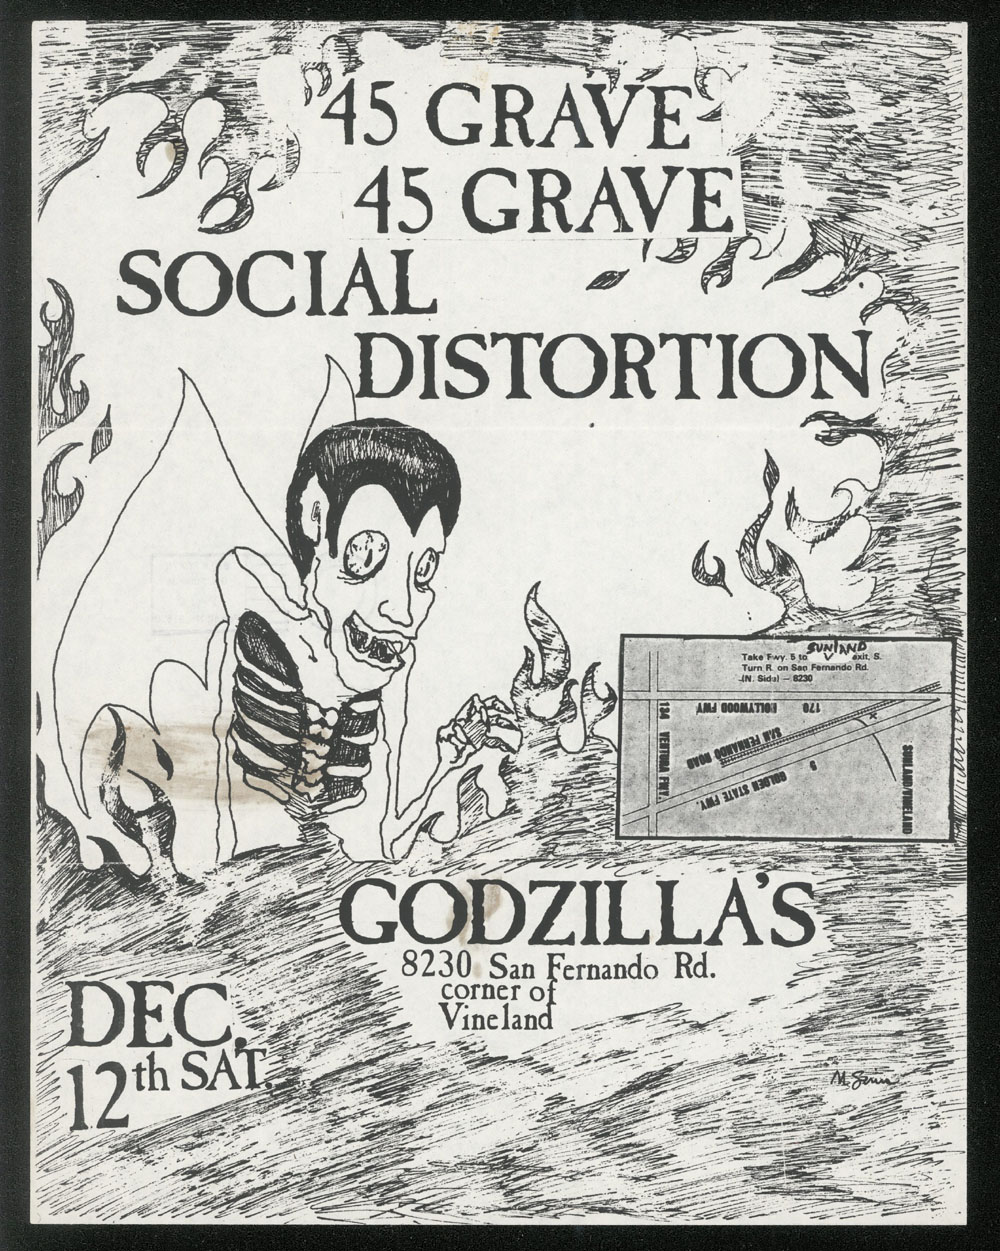 45 GRAVE w/ Social Distortion at Godzilla's